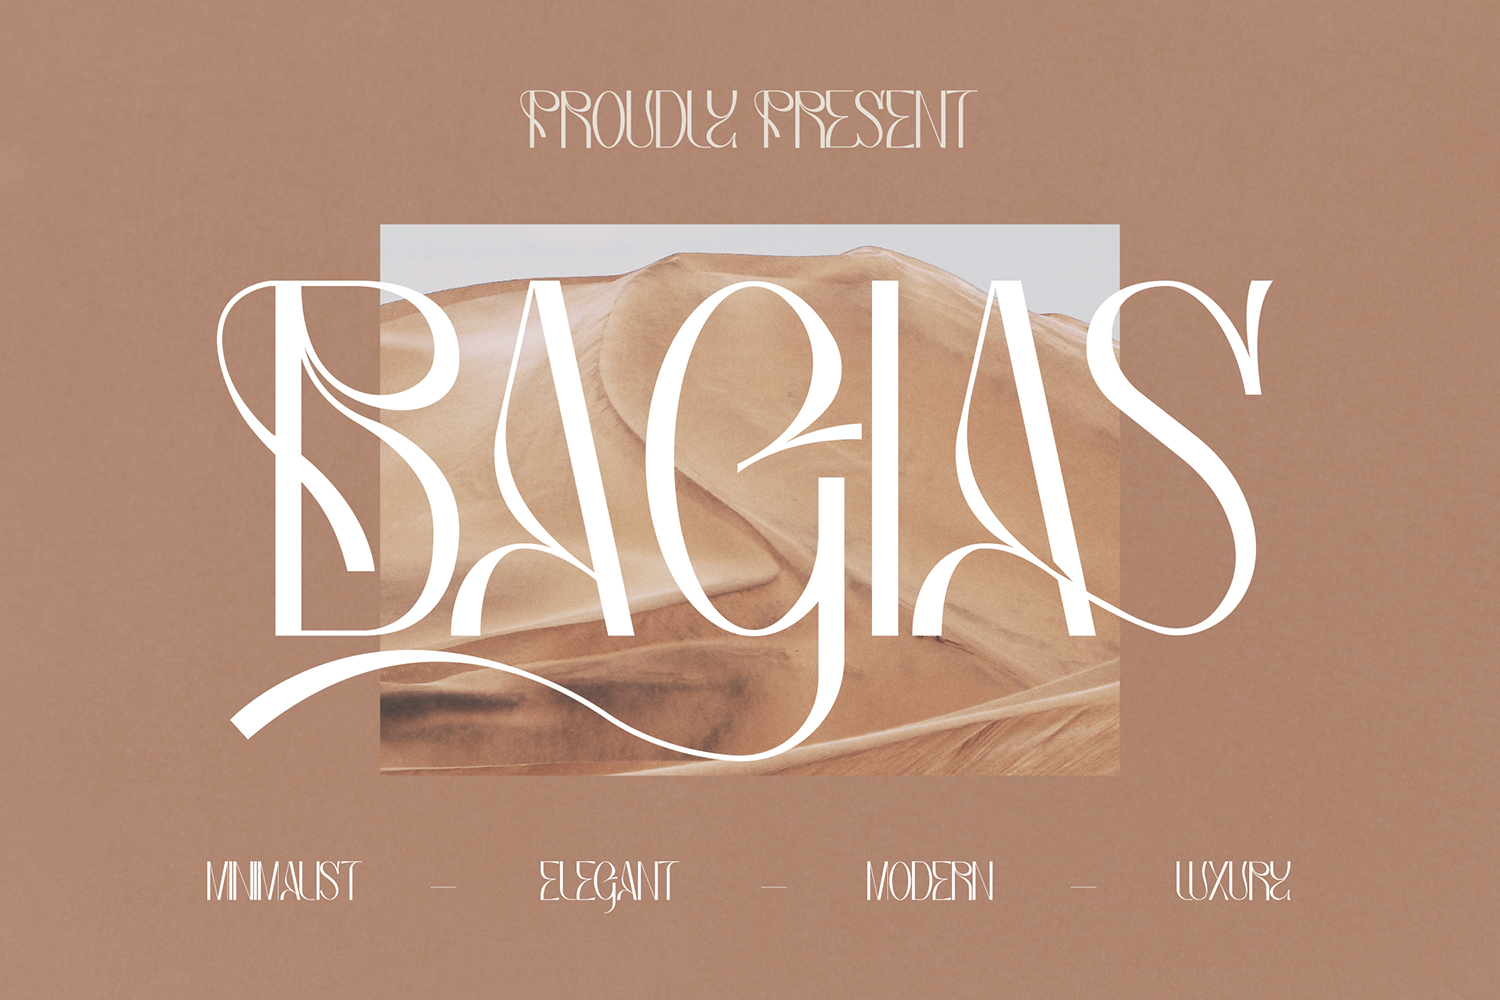 Bagias Free Font